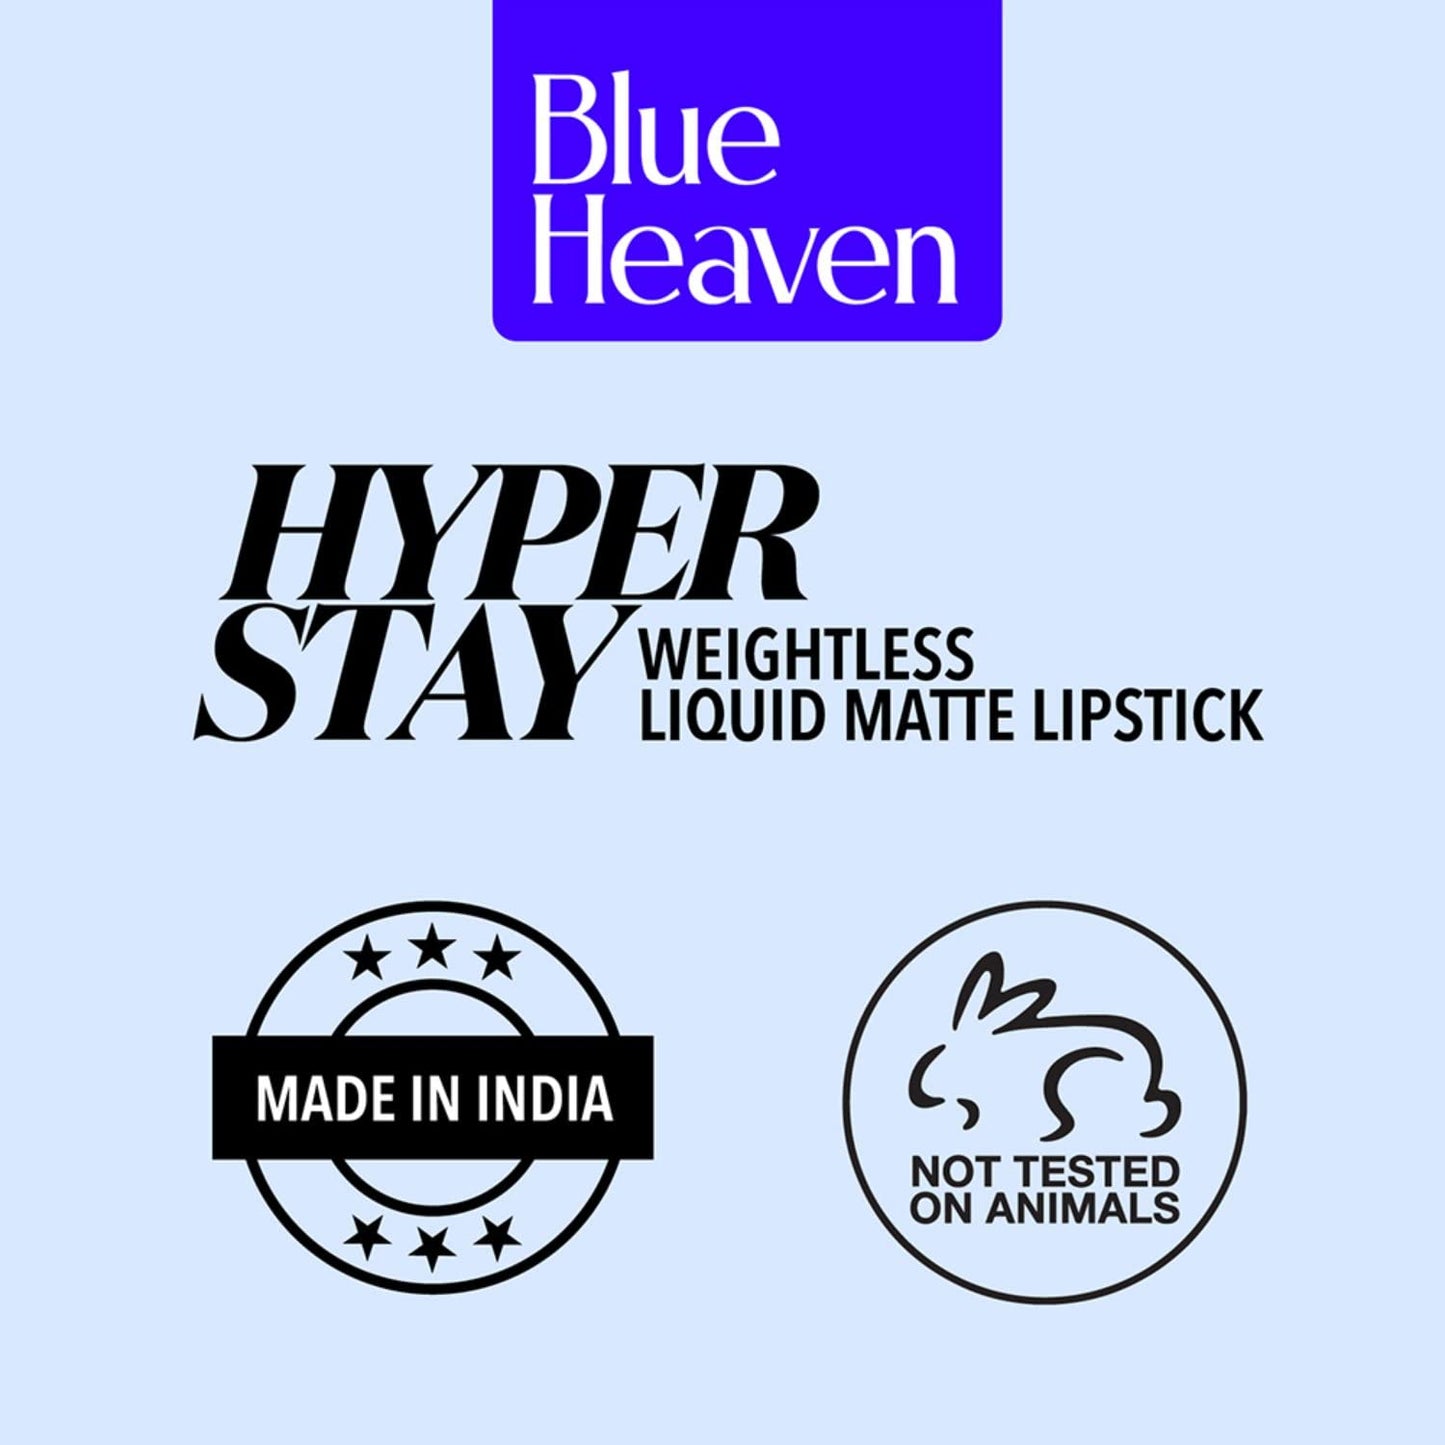 Blue Heaven Hyperstay Weightless Liquid Matte Lipstick, Smudgeproof, Transfer proof, Hibiscus Bloom, 6ml